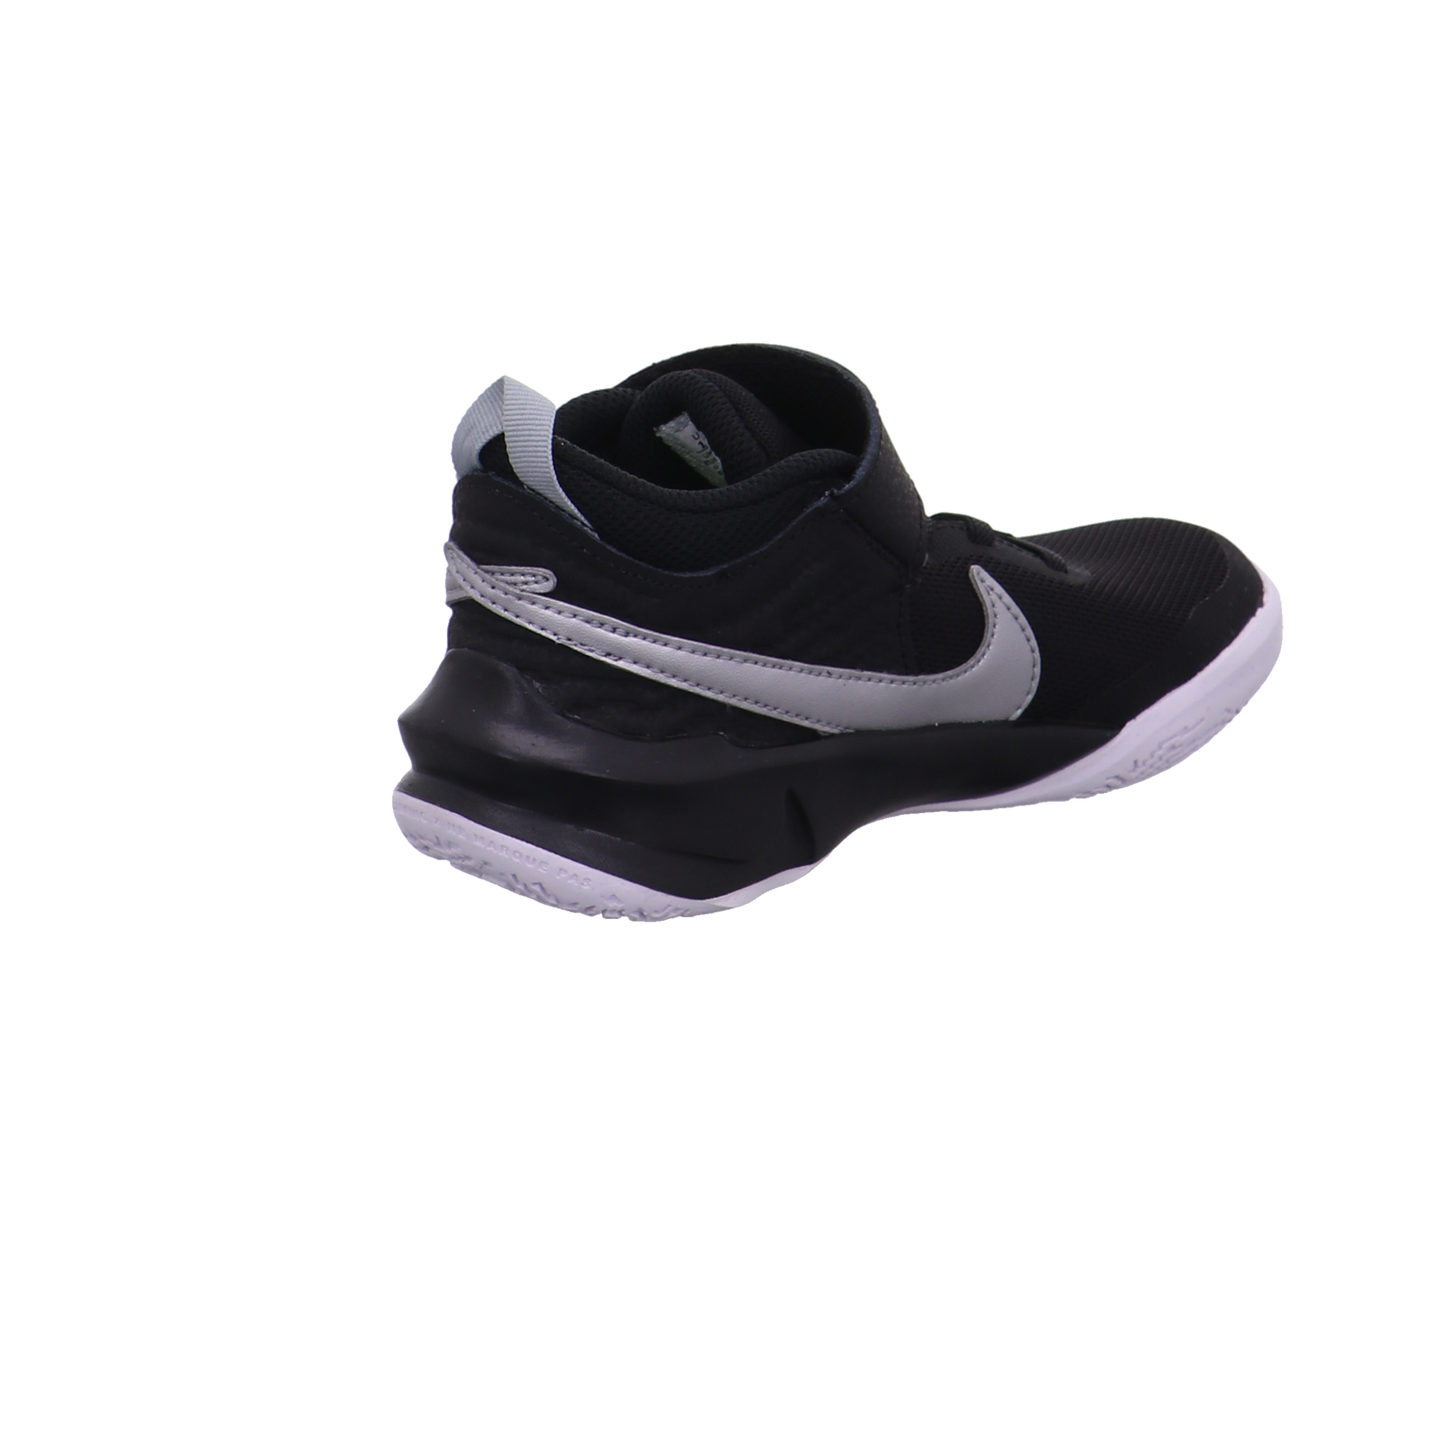 Nike Sneaker schwarz kombi Bild5